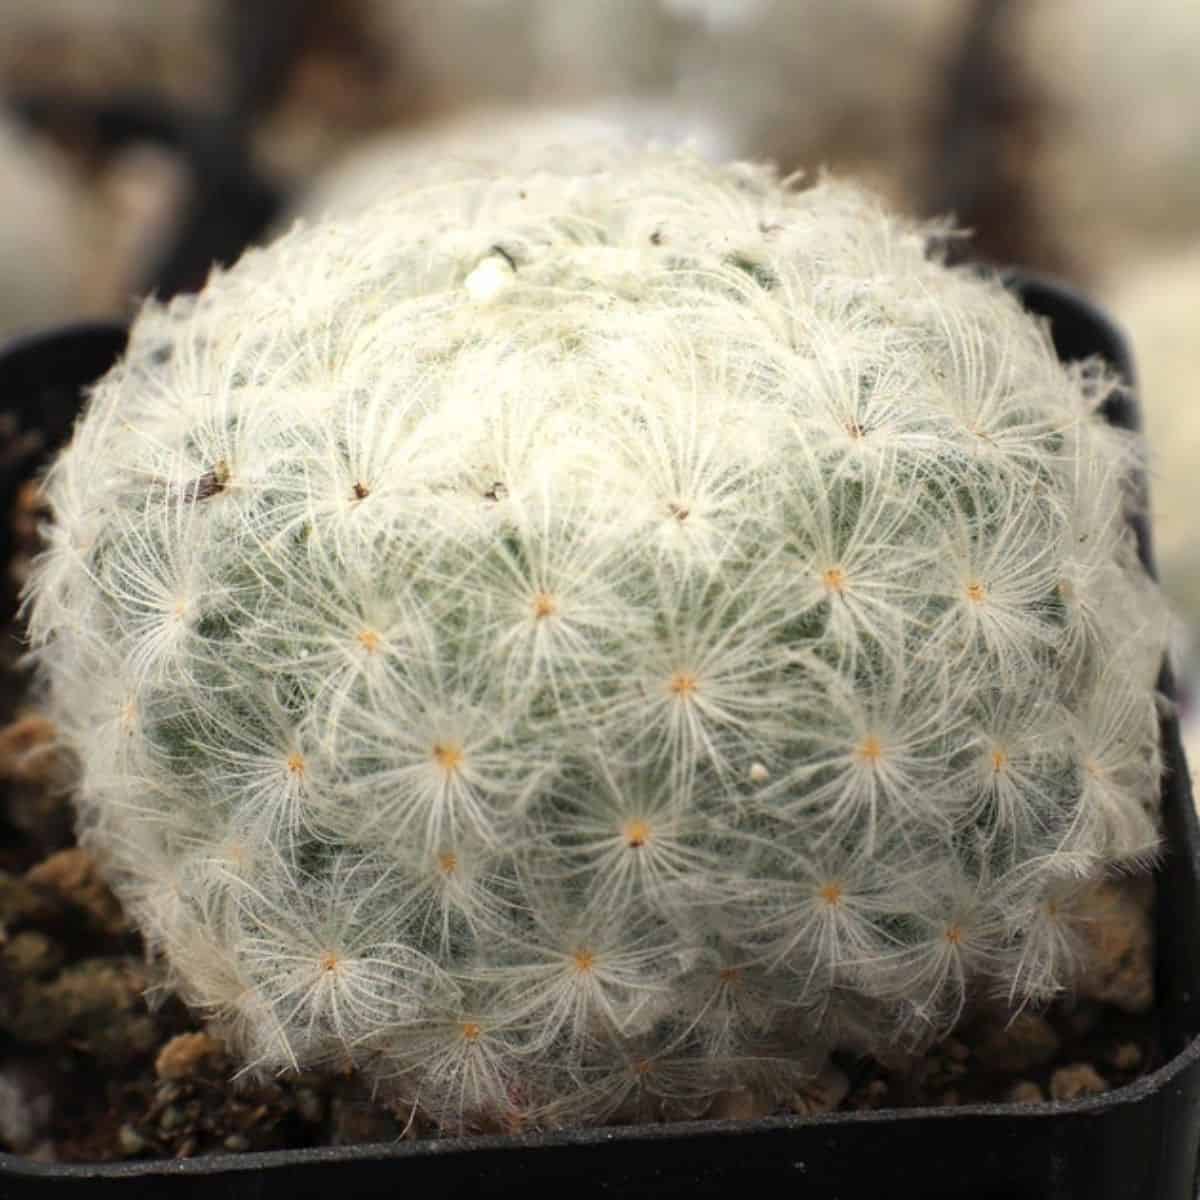 Mammillaria plumosa - Feather Cactus in a pot.